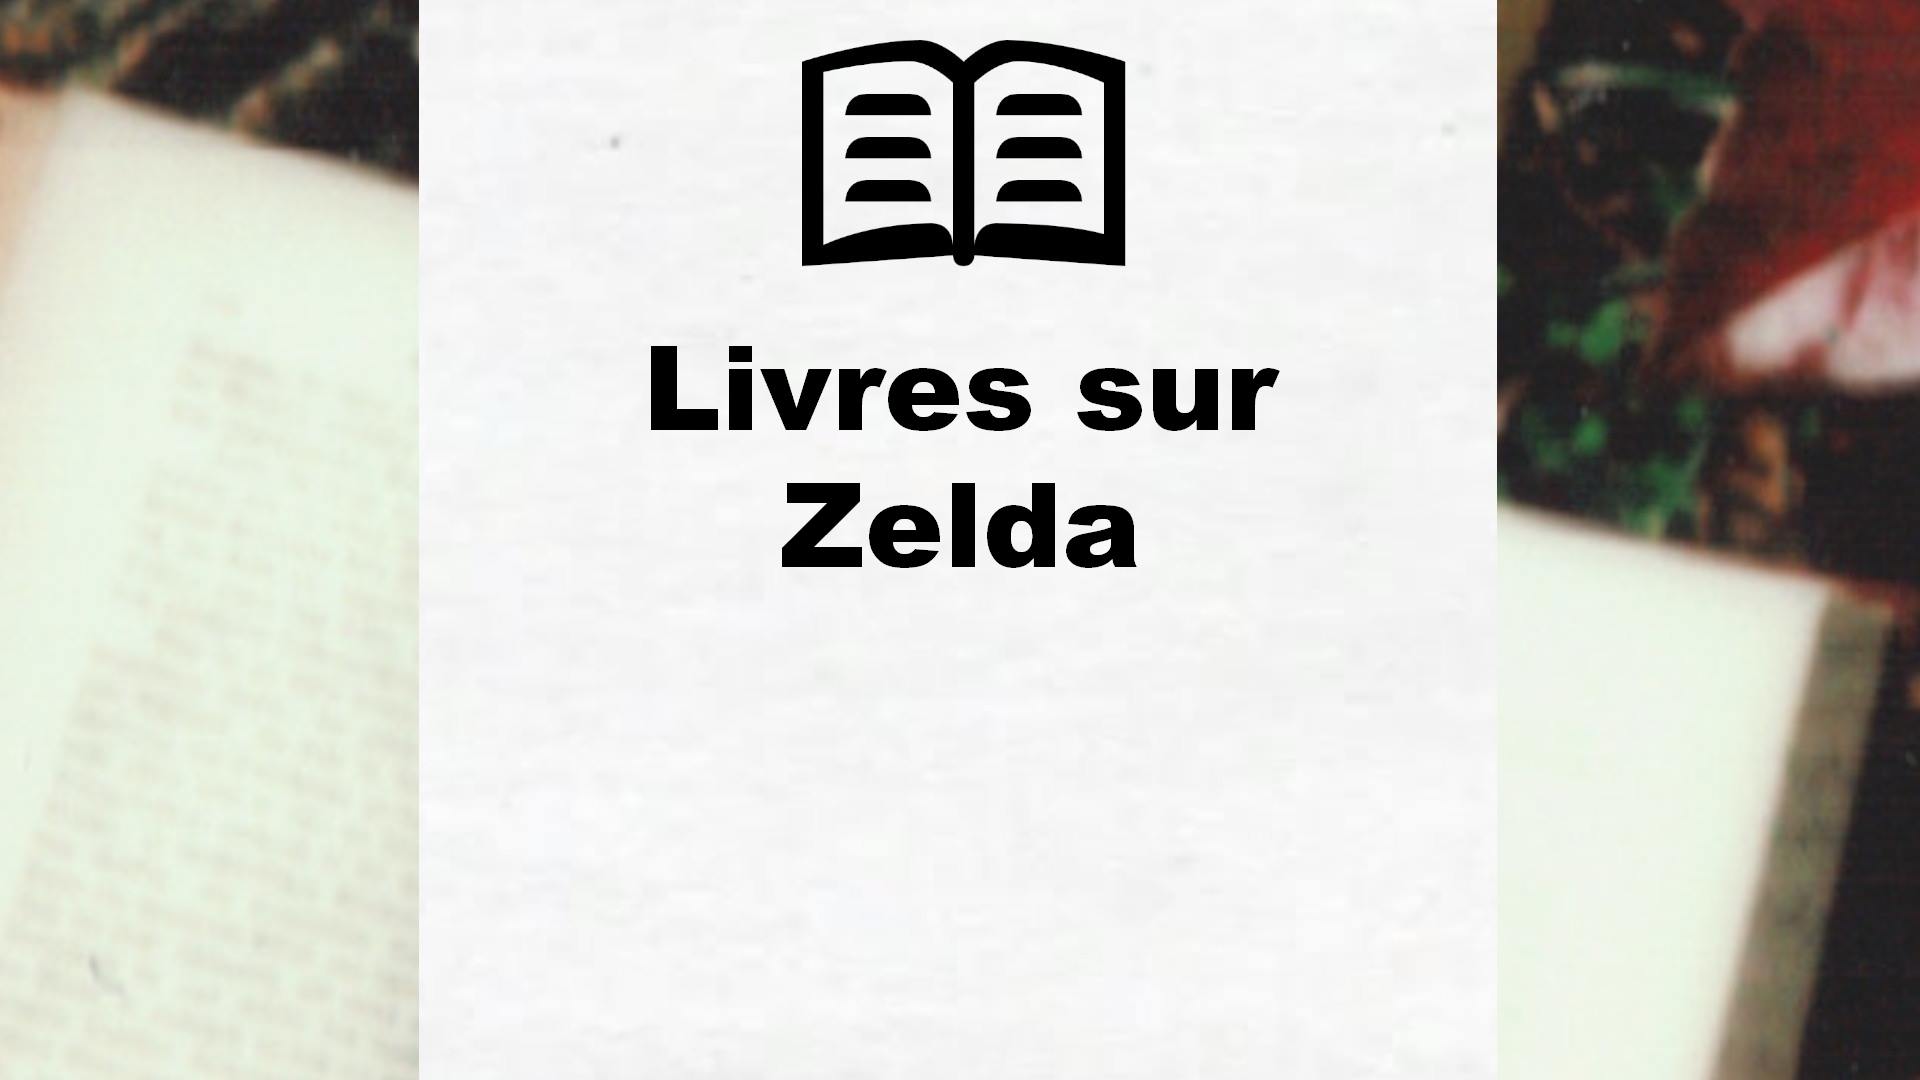 Livres sur Zelda